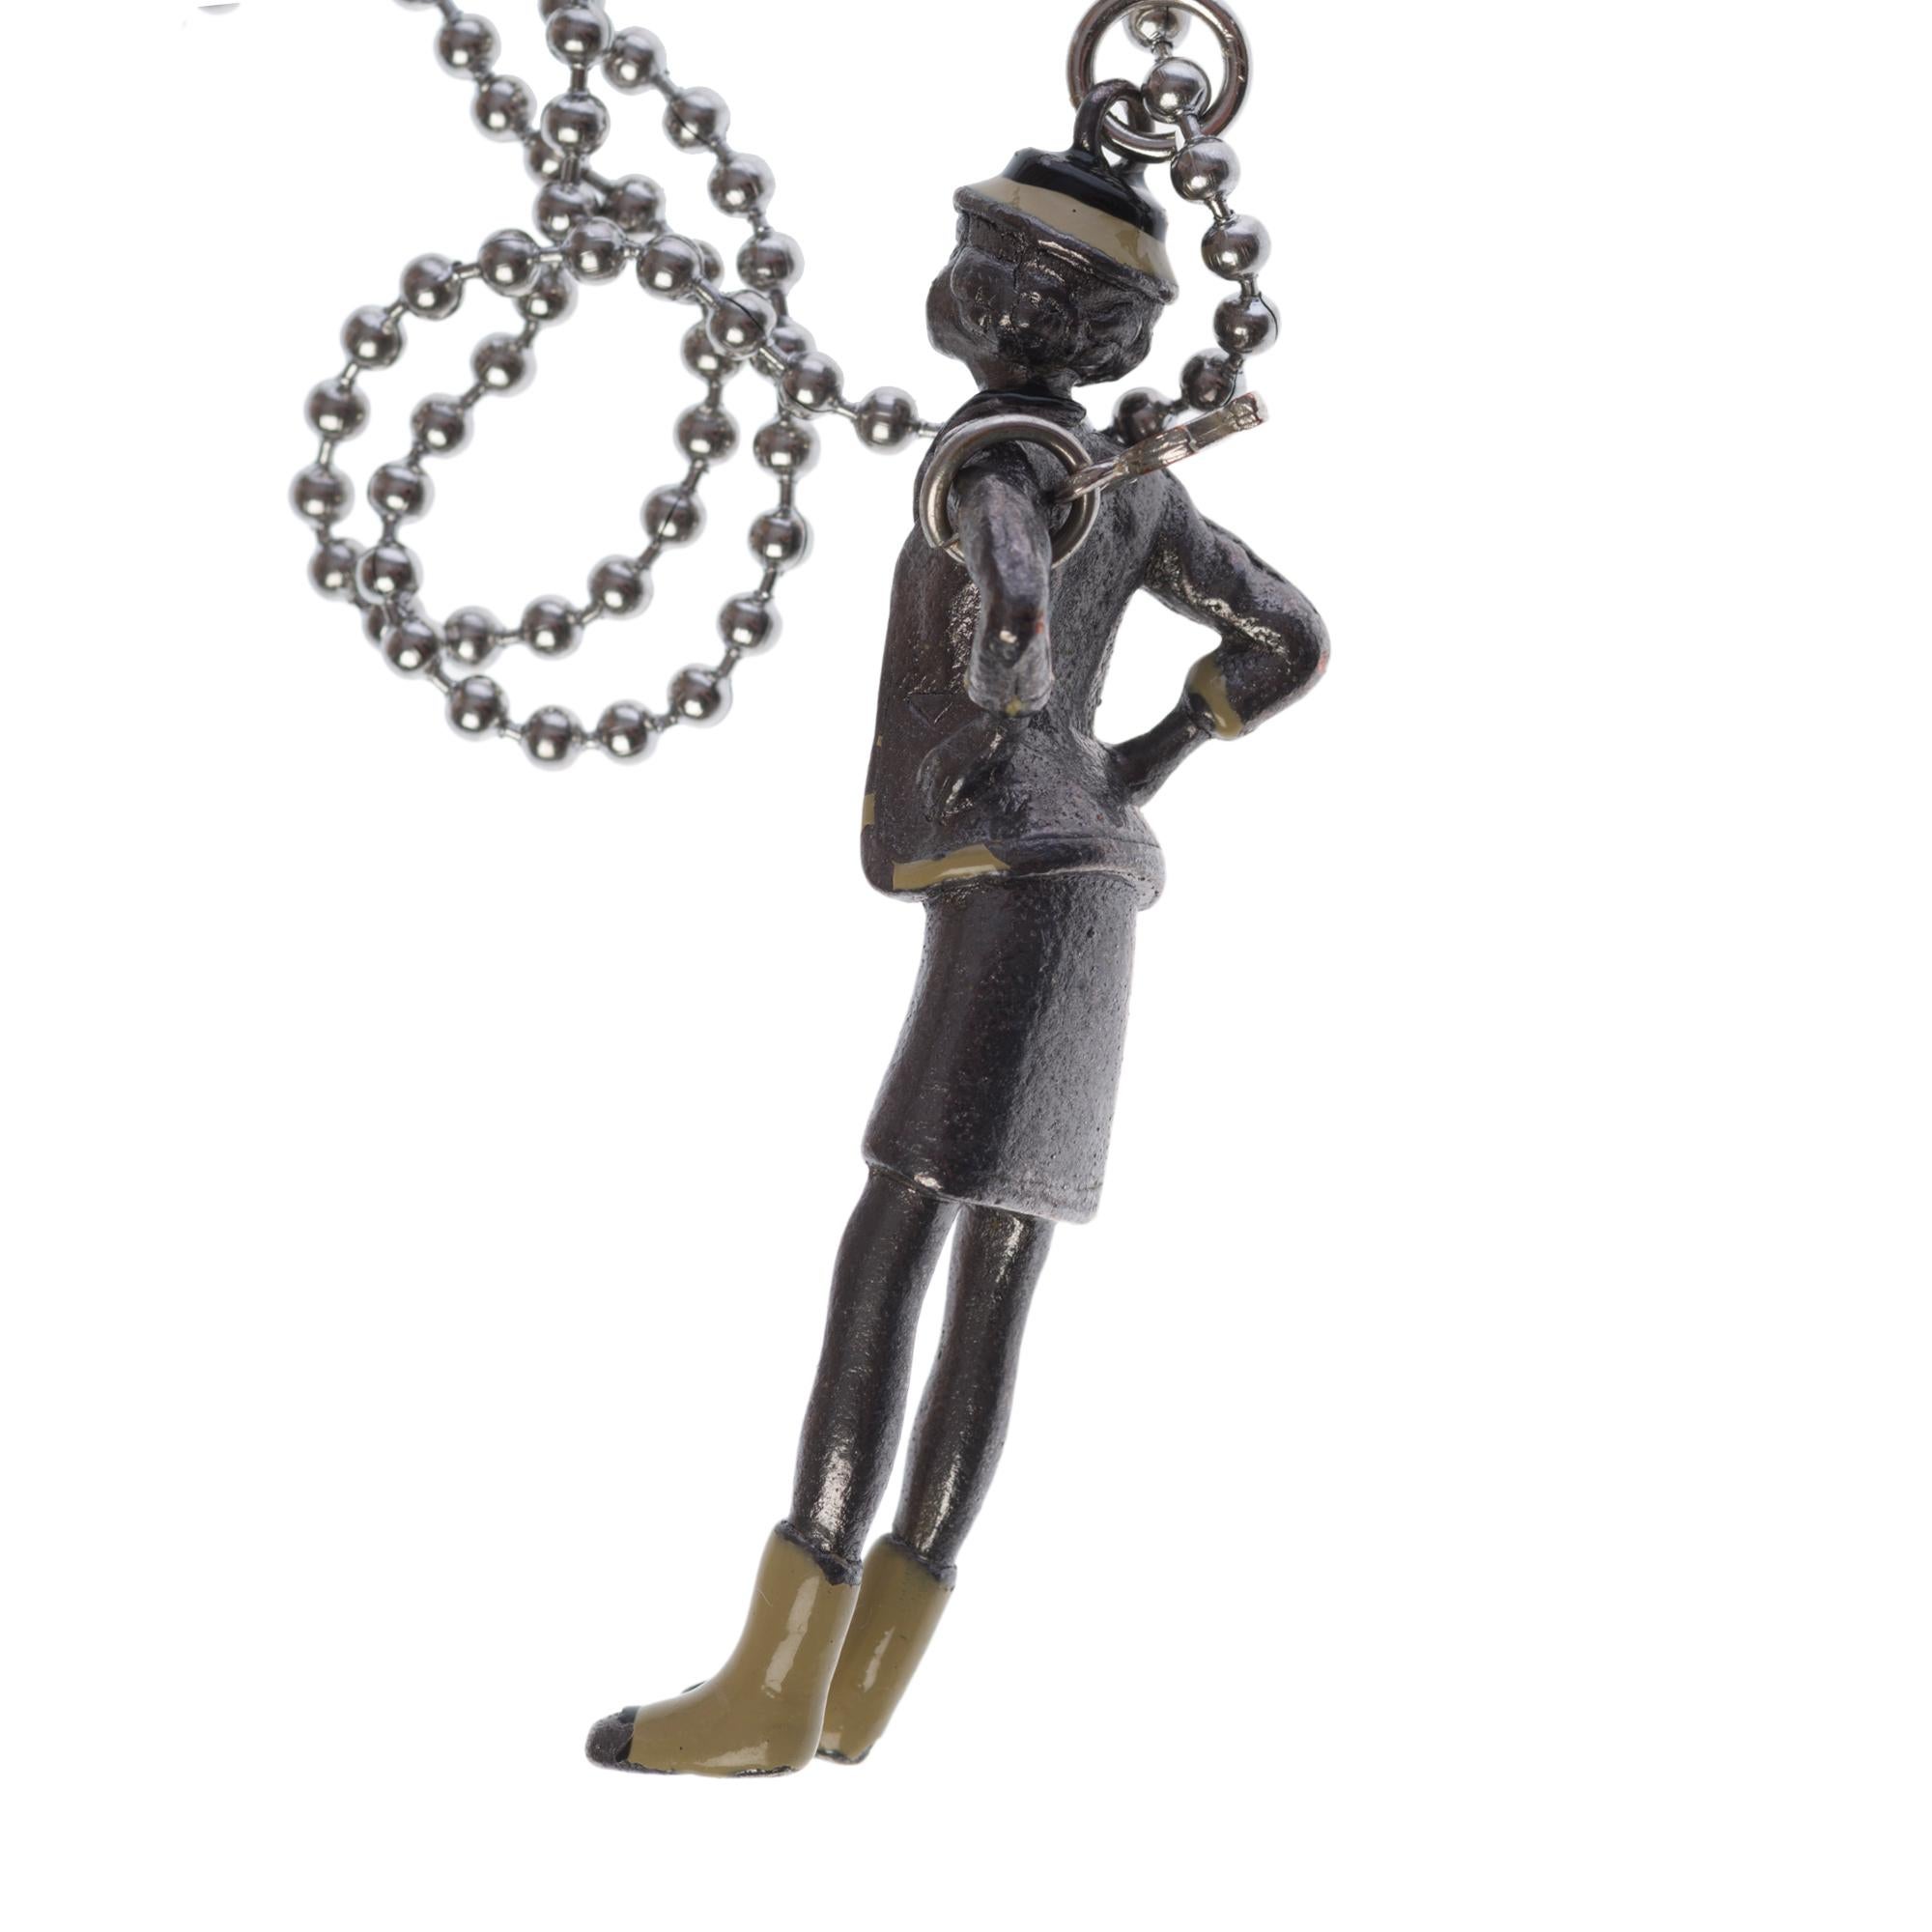 Contemporary Collector Coco Chanel Doll Necklace in silver metal